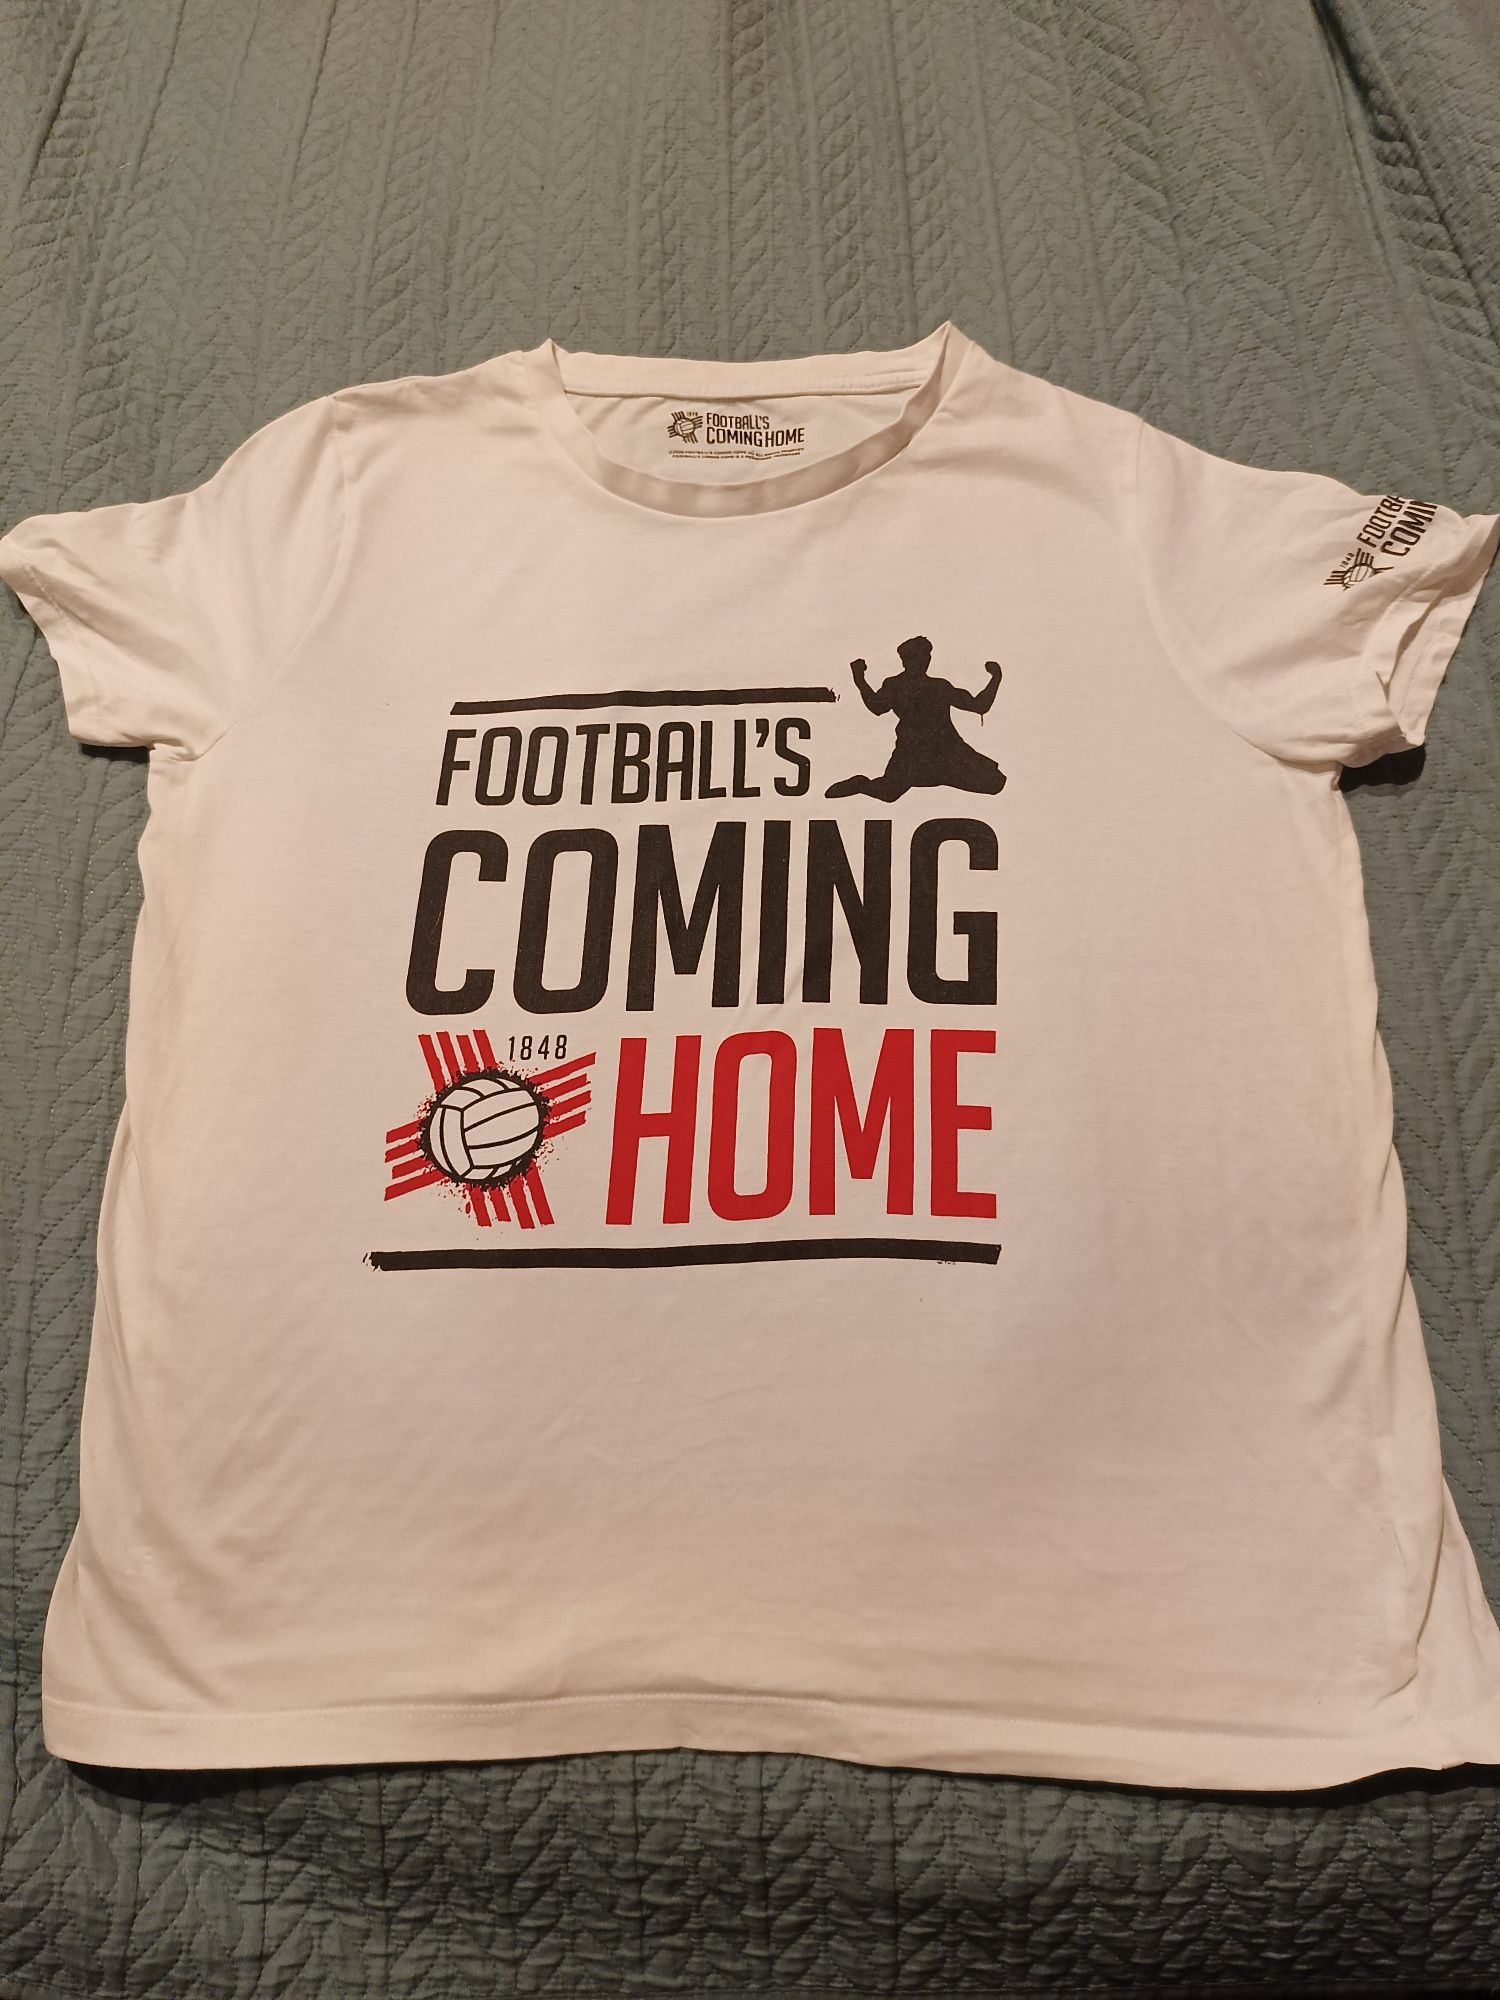 Footballs coming home t-shirt